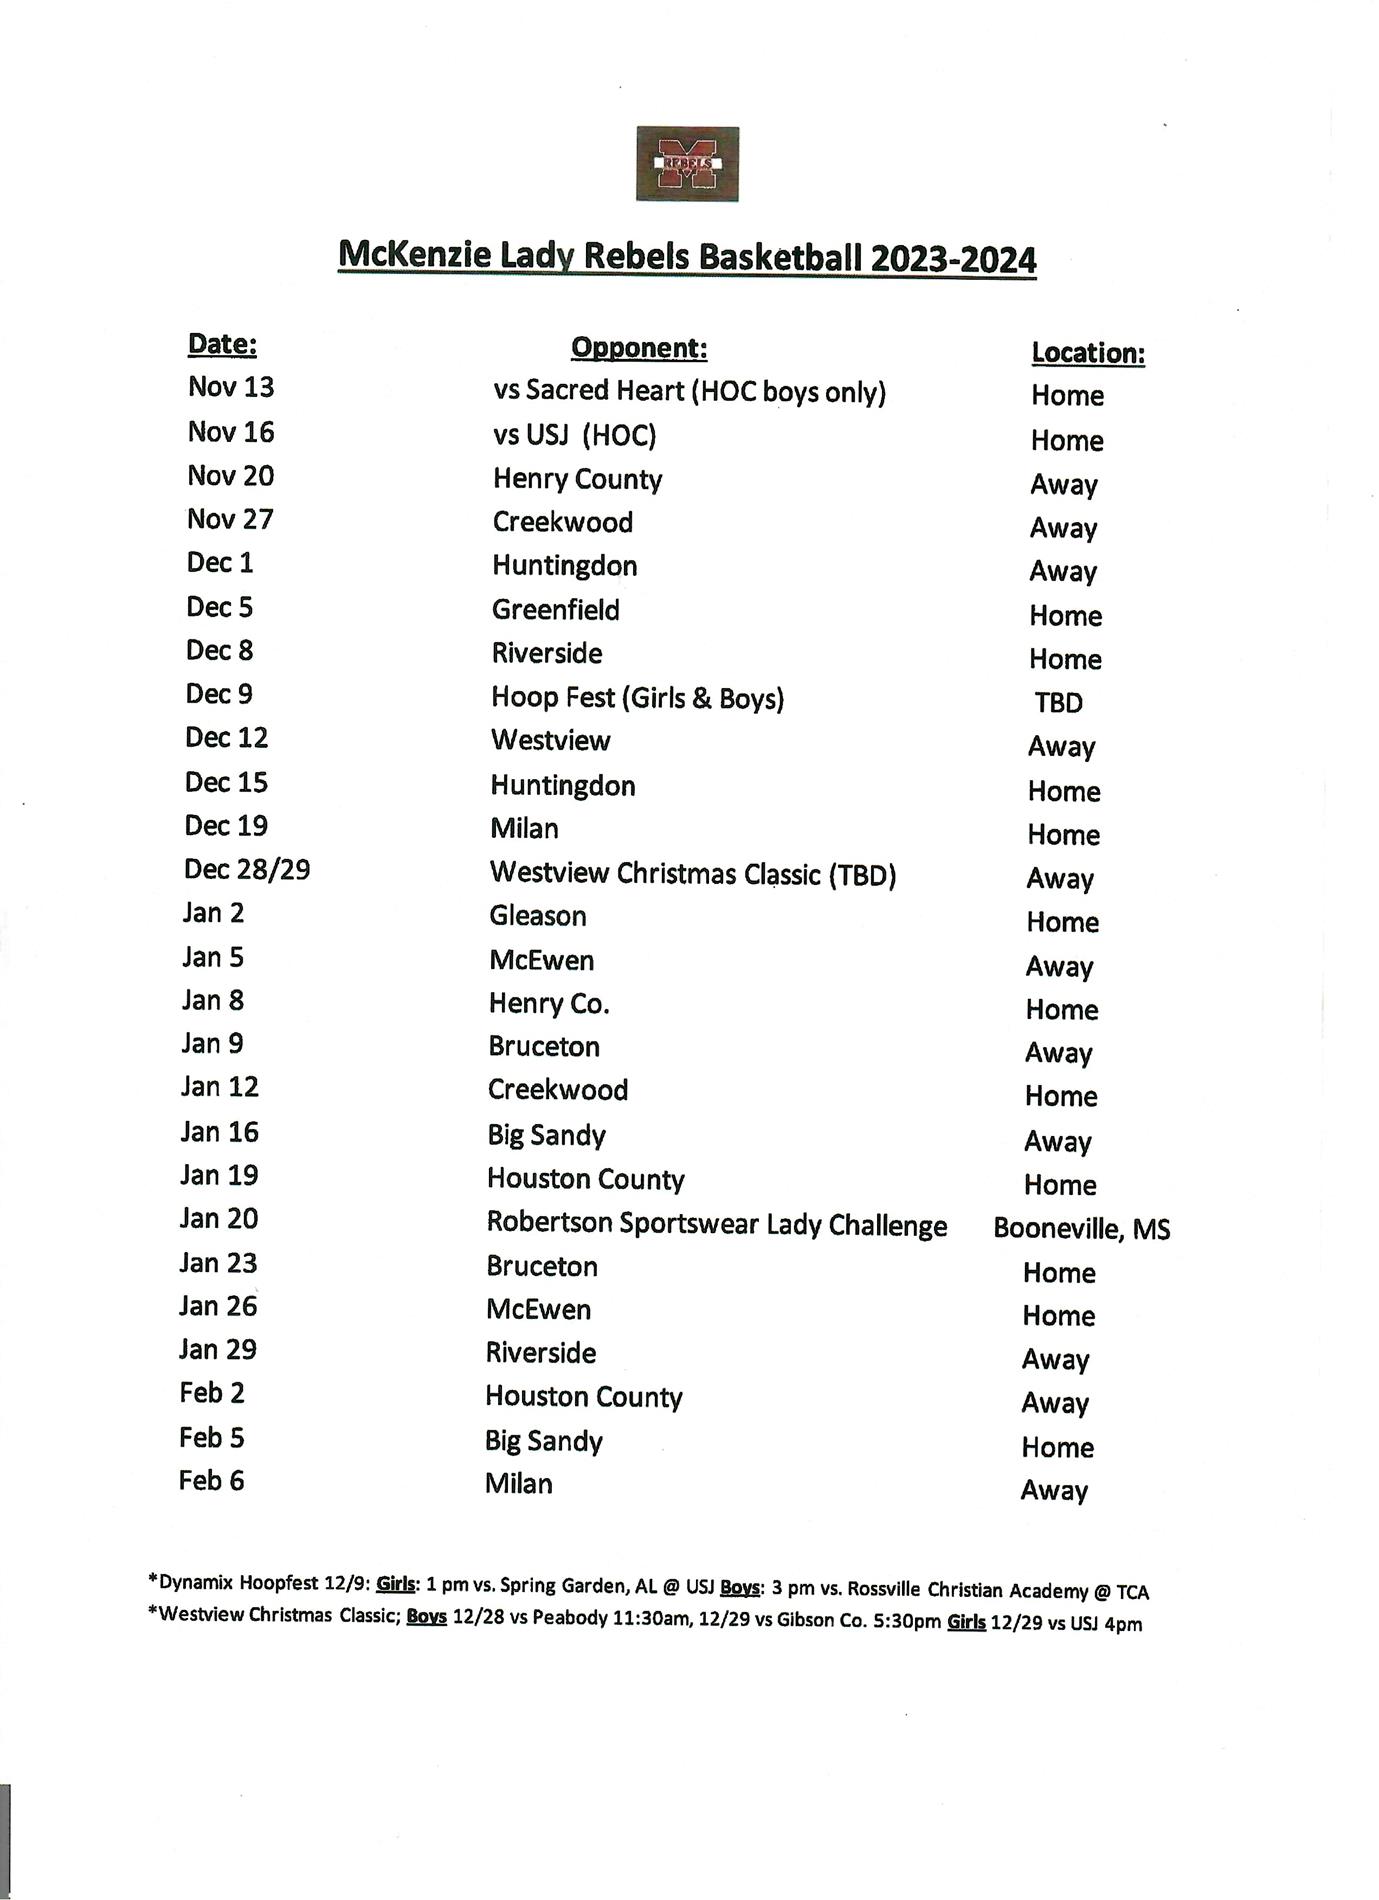 MHS Basketball Schedule